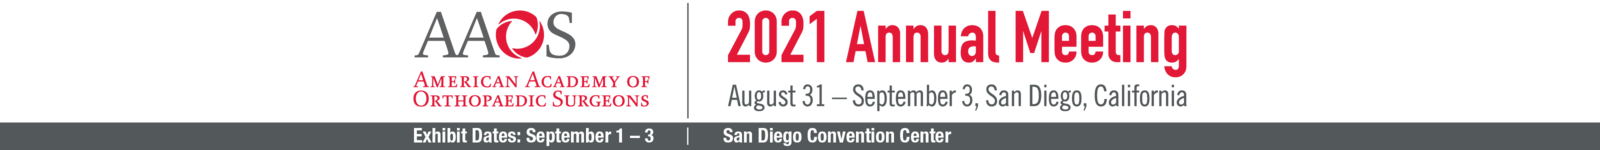 AAOS 2021 Annual Meeting logo